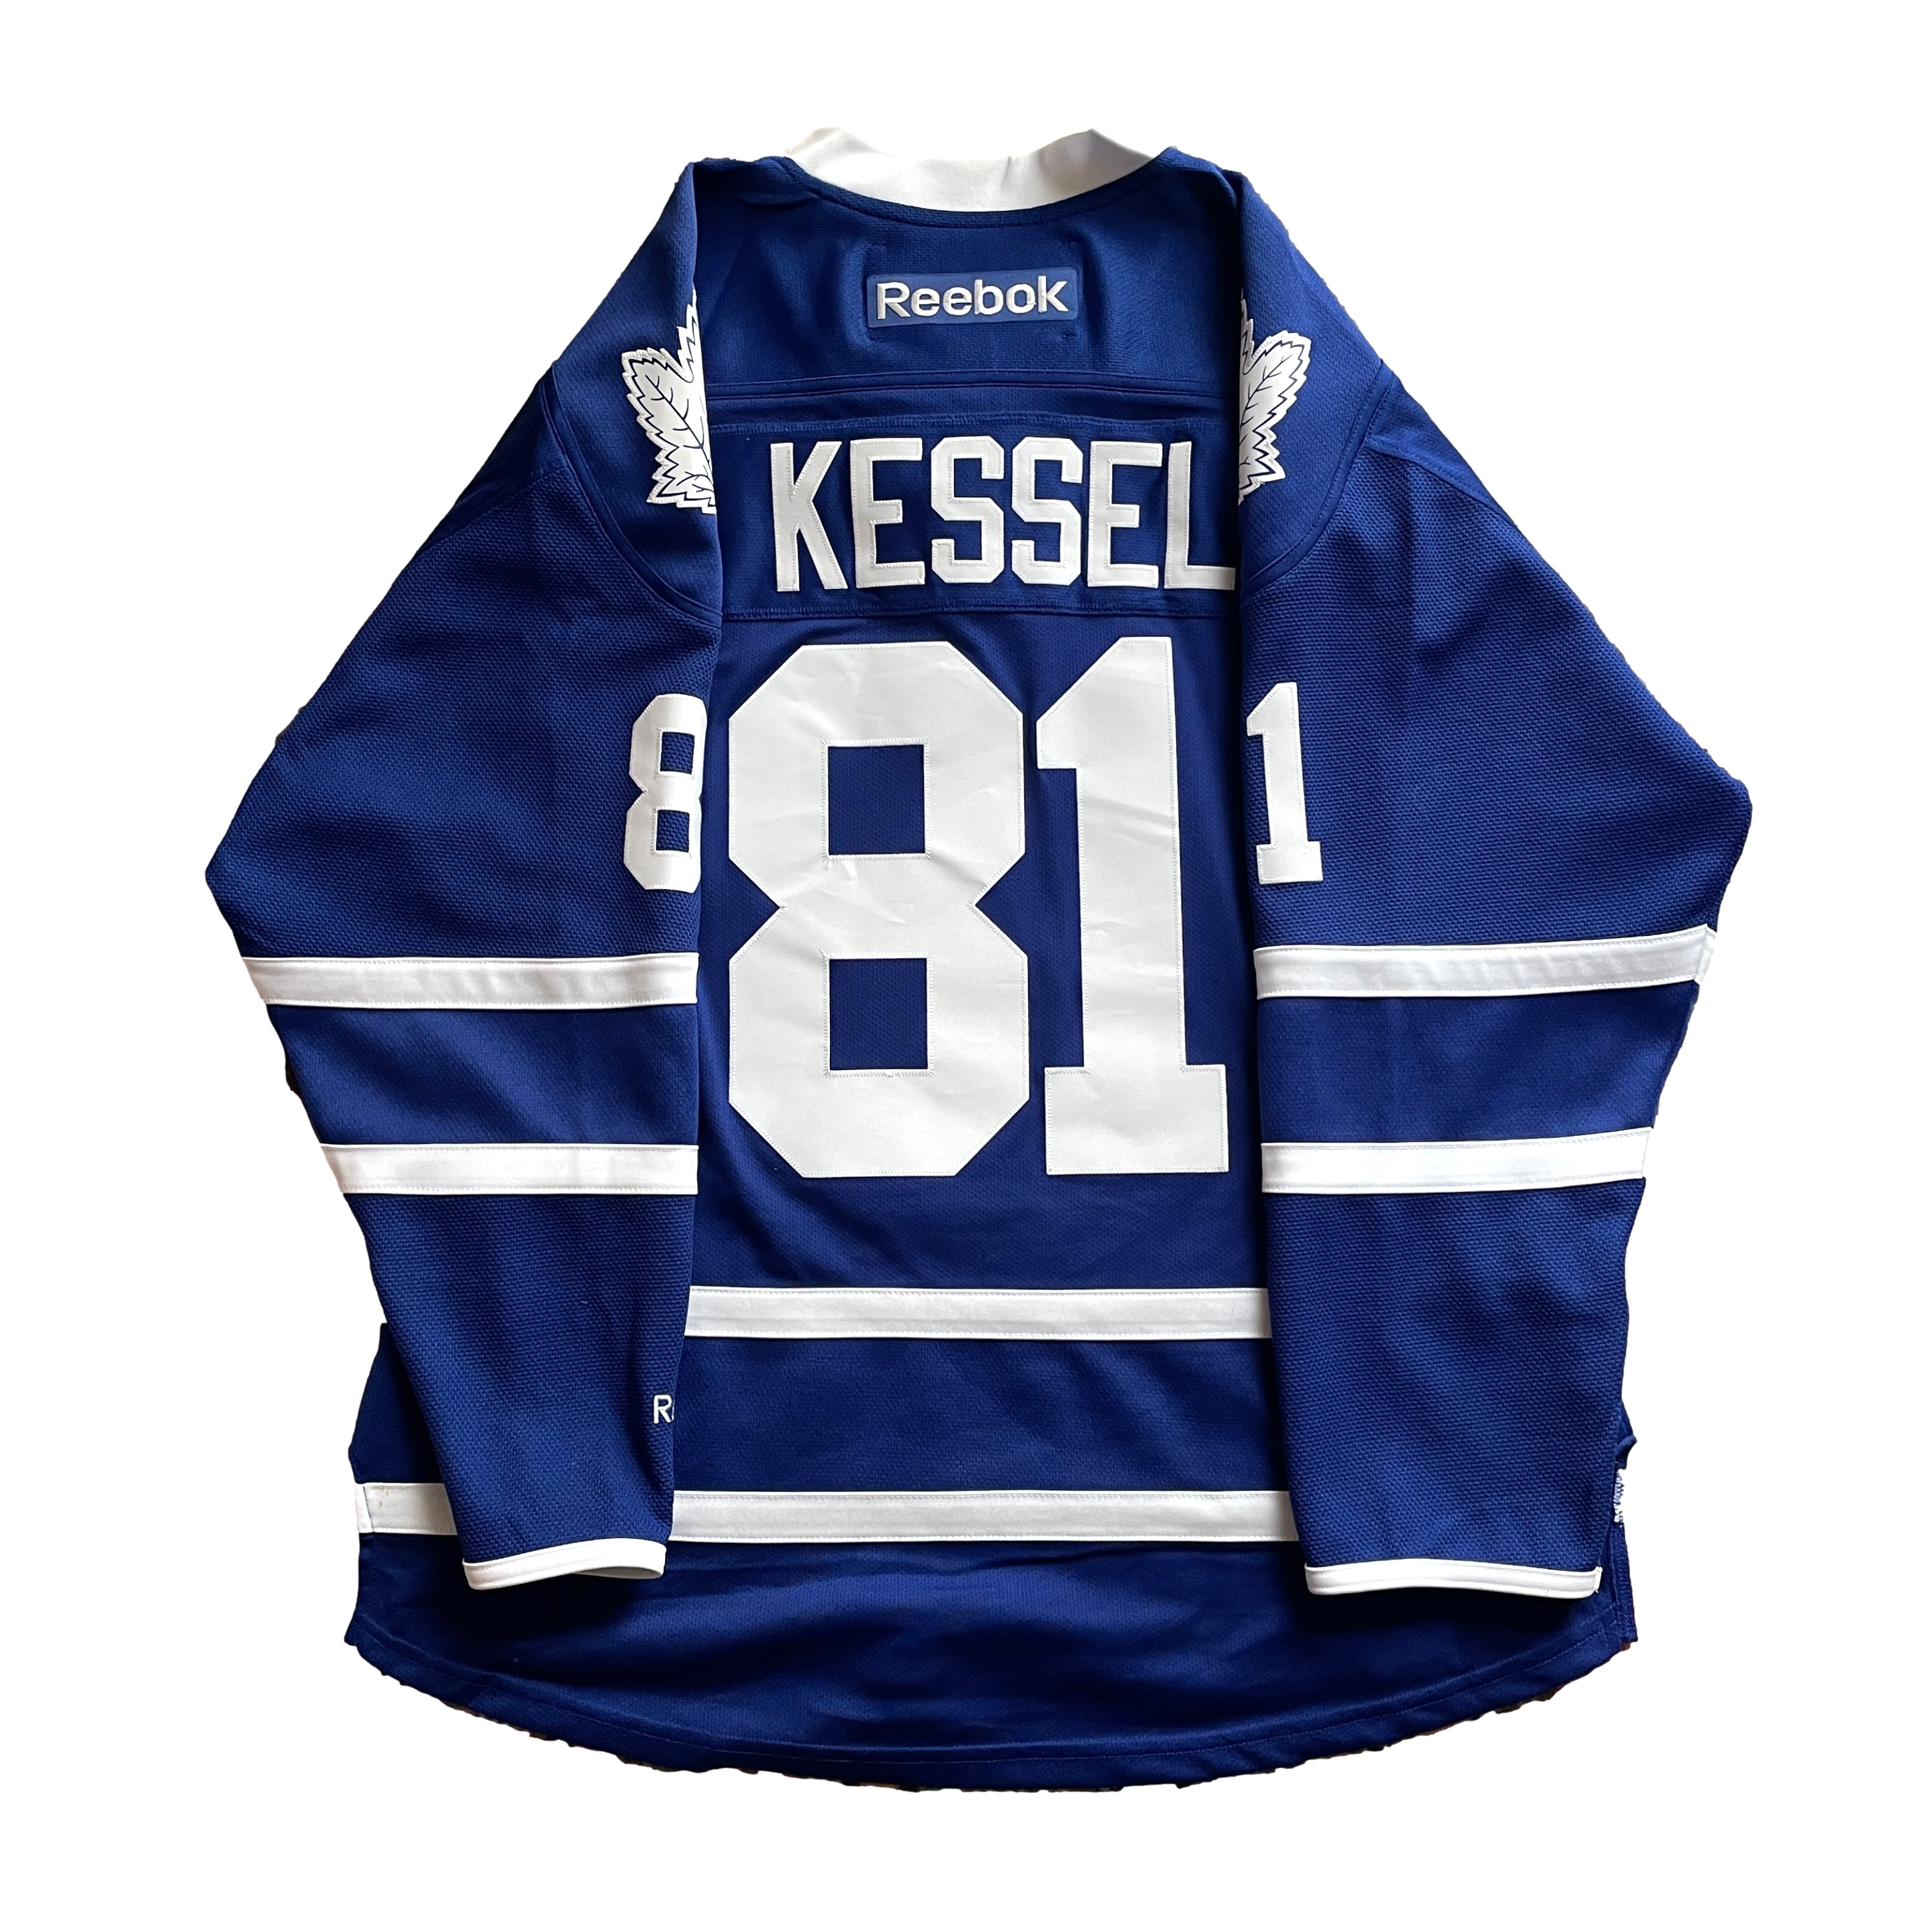 Toronto Maple Leafs NHL Hockey Jersey (L)